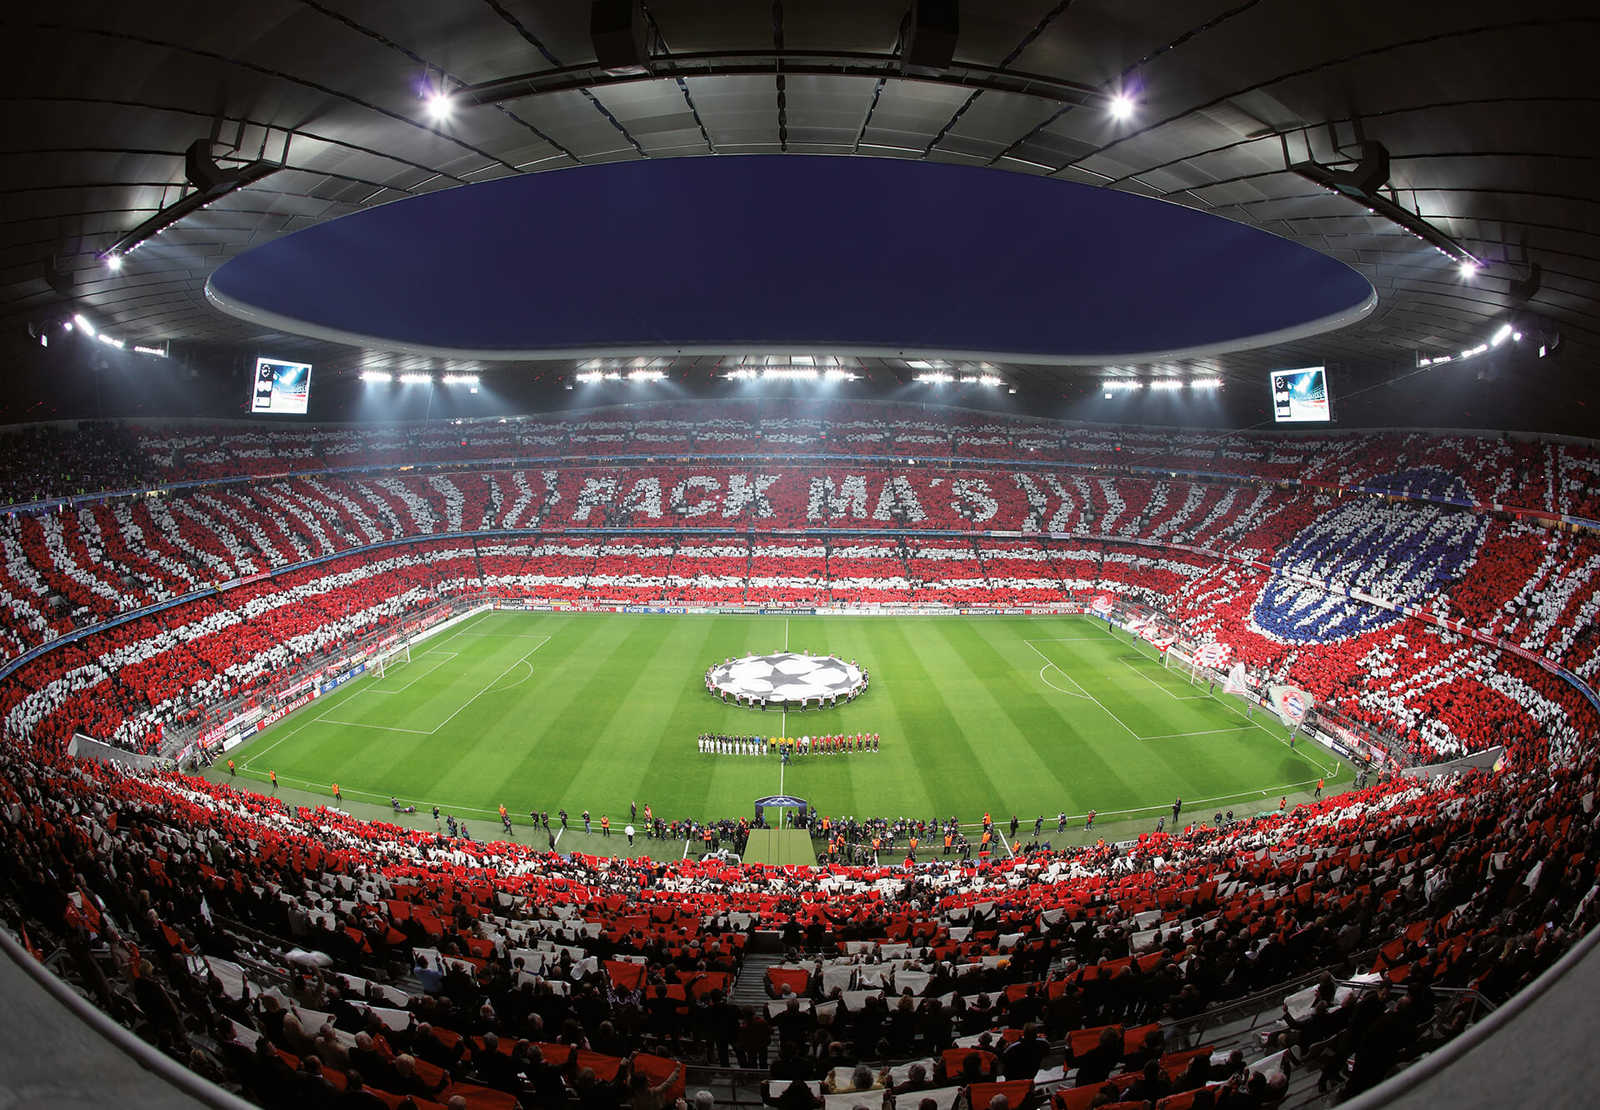         Fototapete FC Bayern Stadion "Pack Ma's"
    